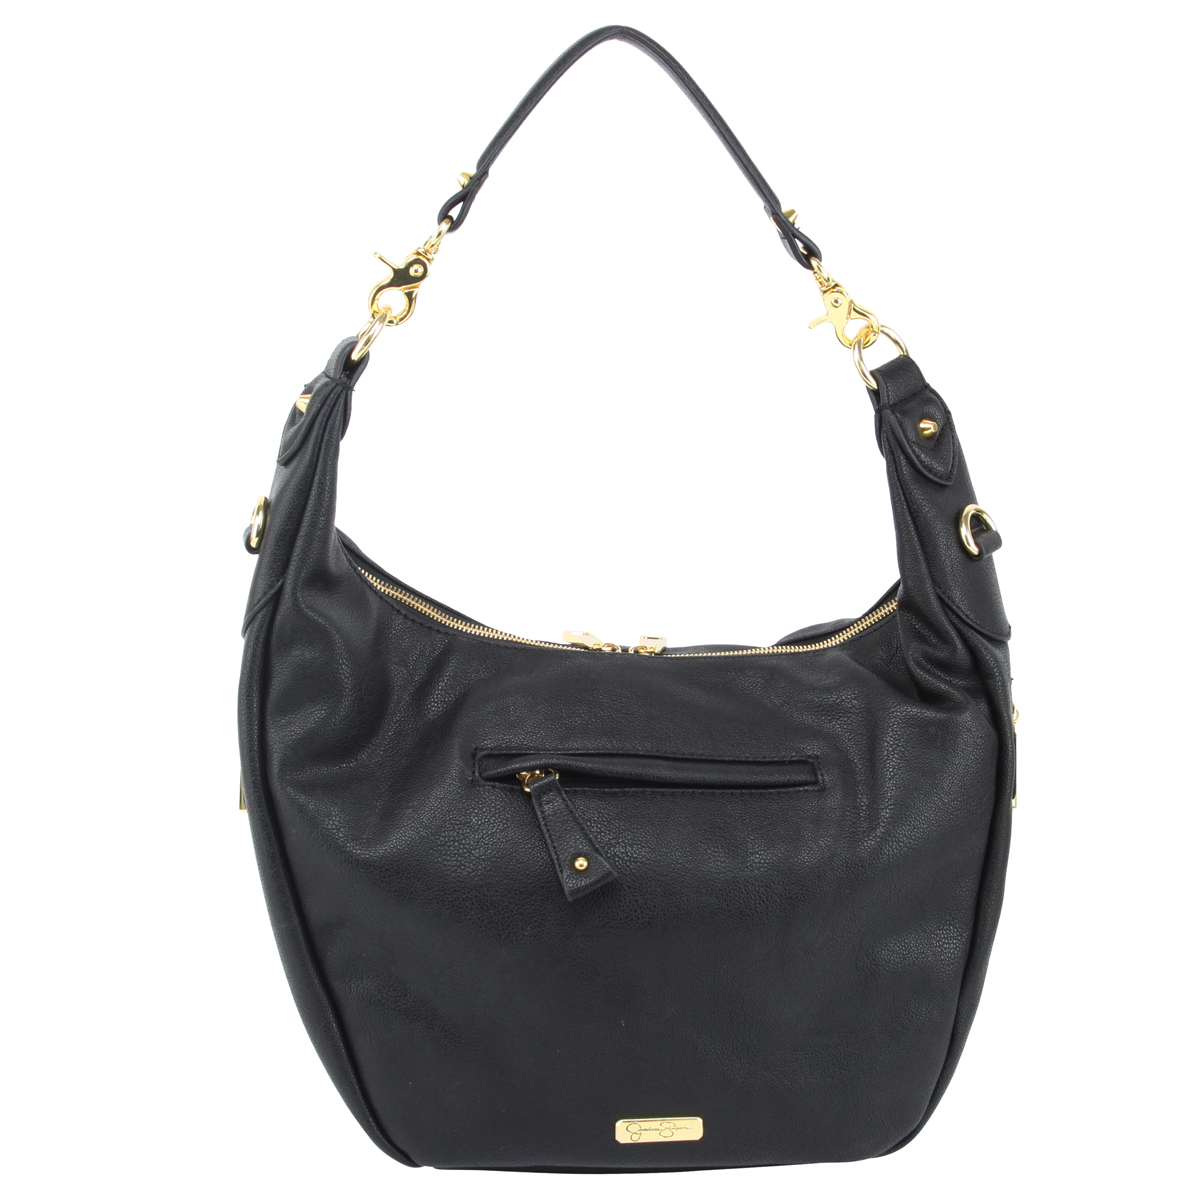 Jessica Simpson Black Colette Hobo Bag | eBay